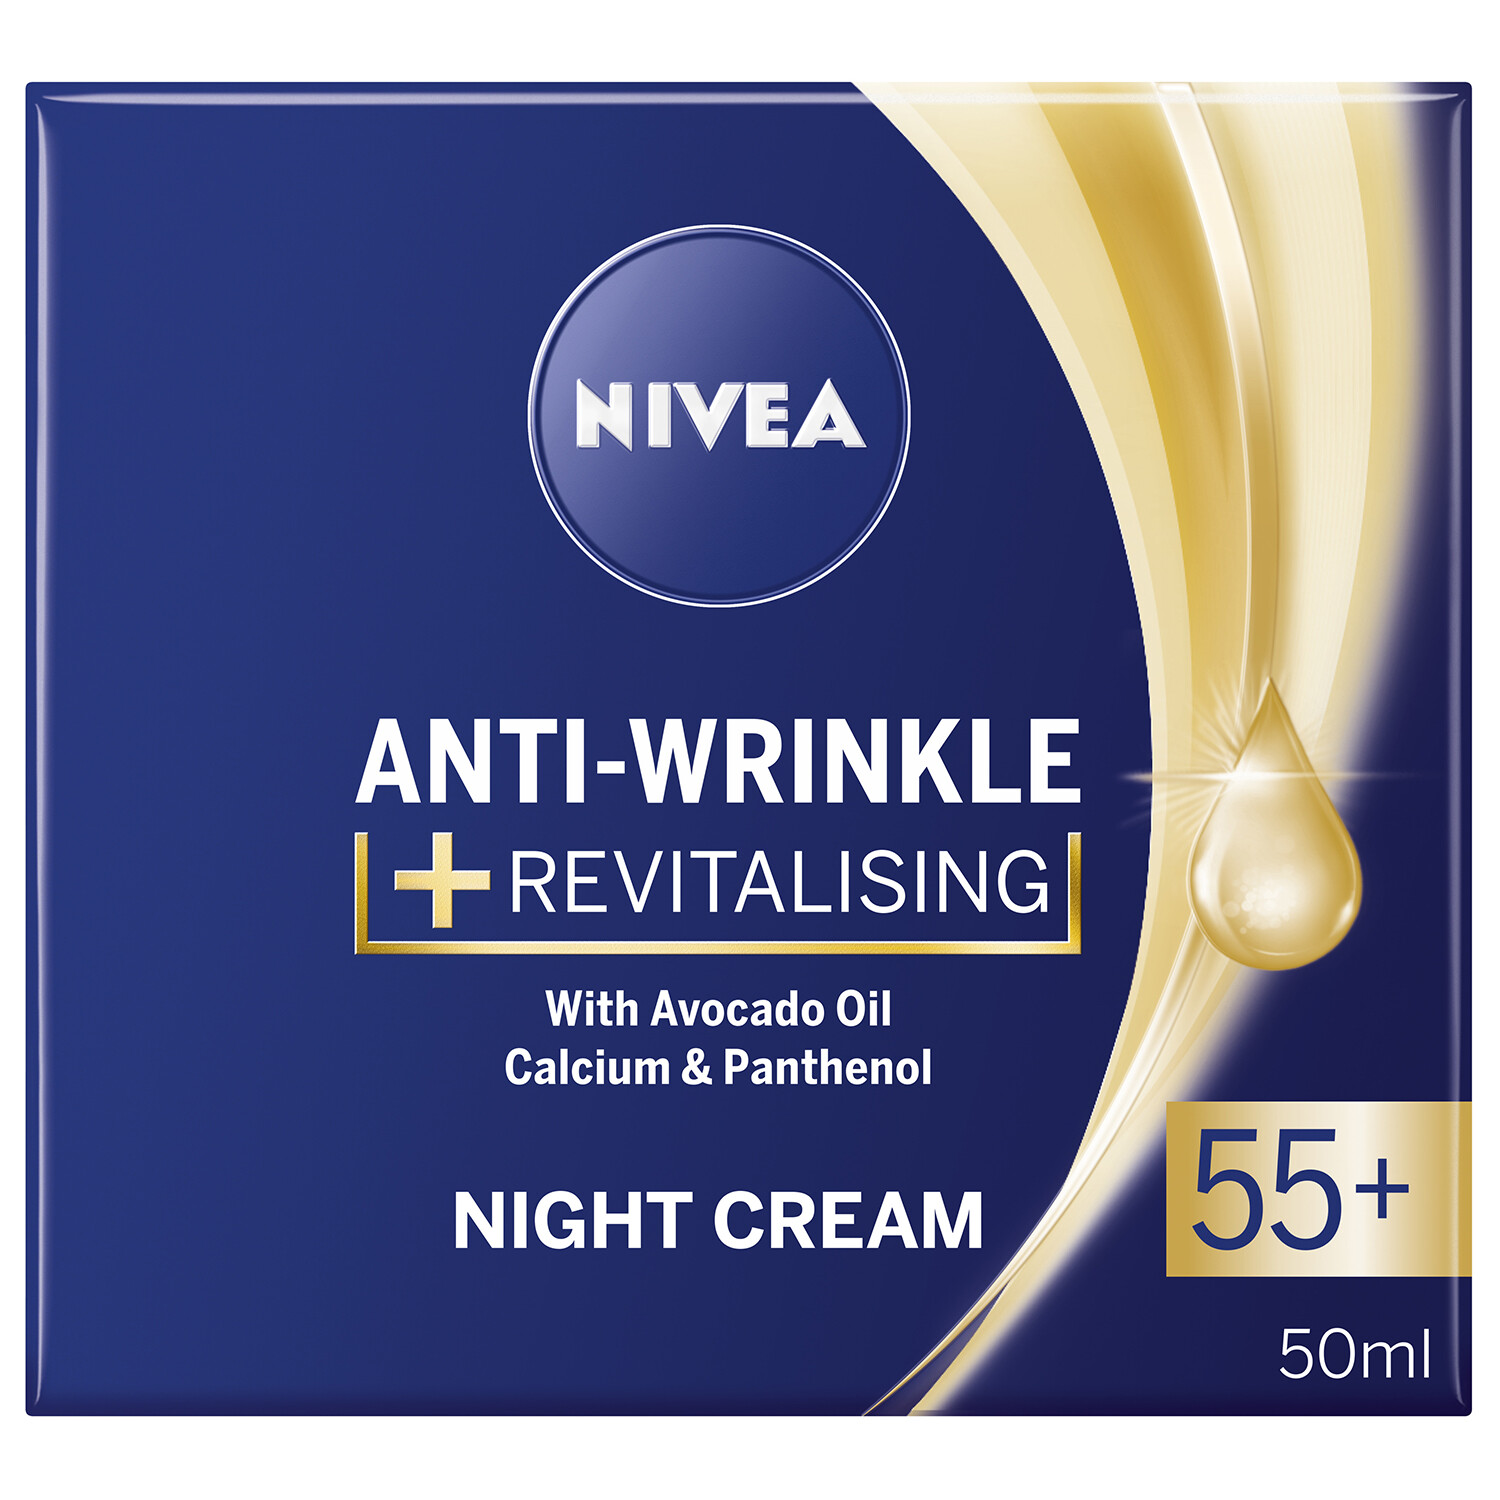 Nivea Anti Wrinkle and Revitalising Night Cream 50ml Image